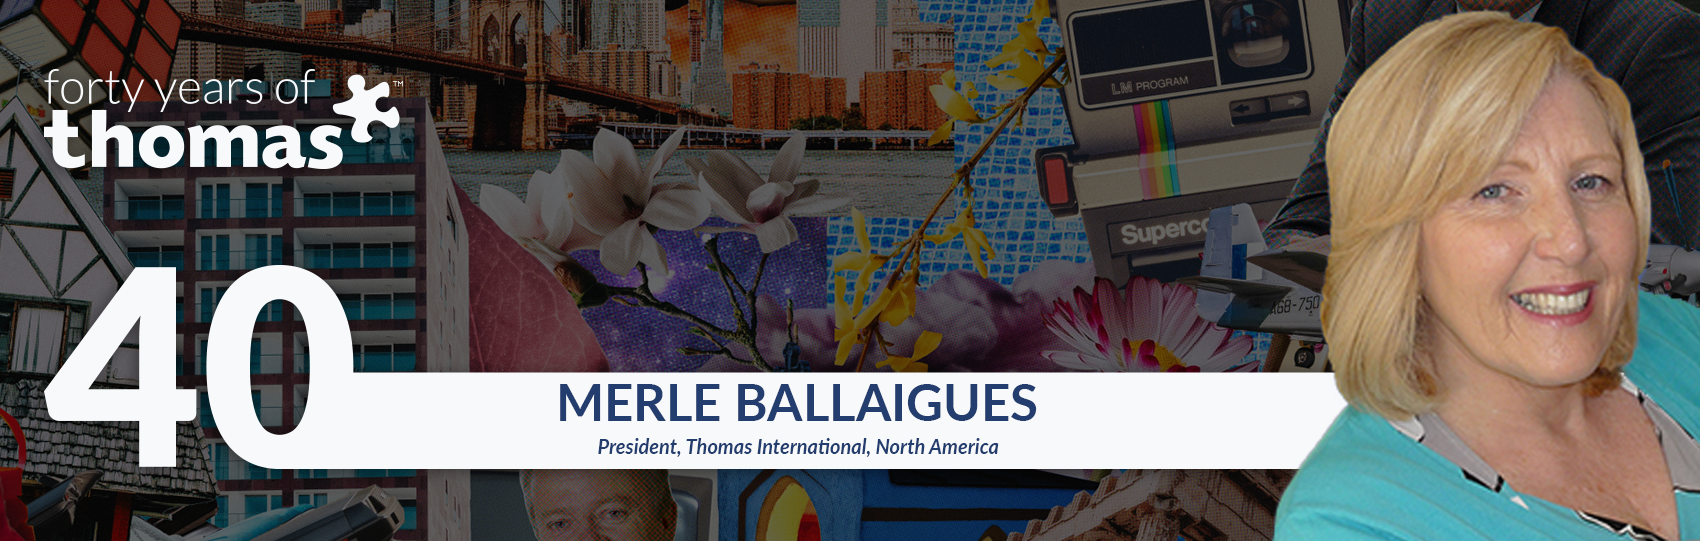 Merle-Ballaigues-40-birthday-hero